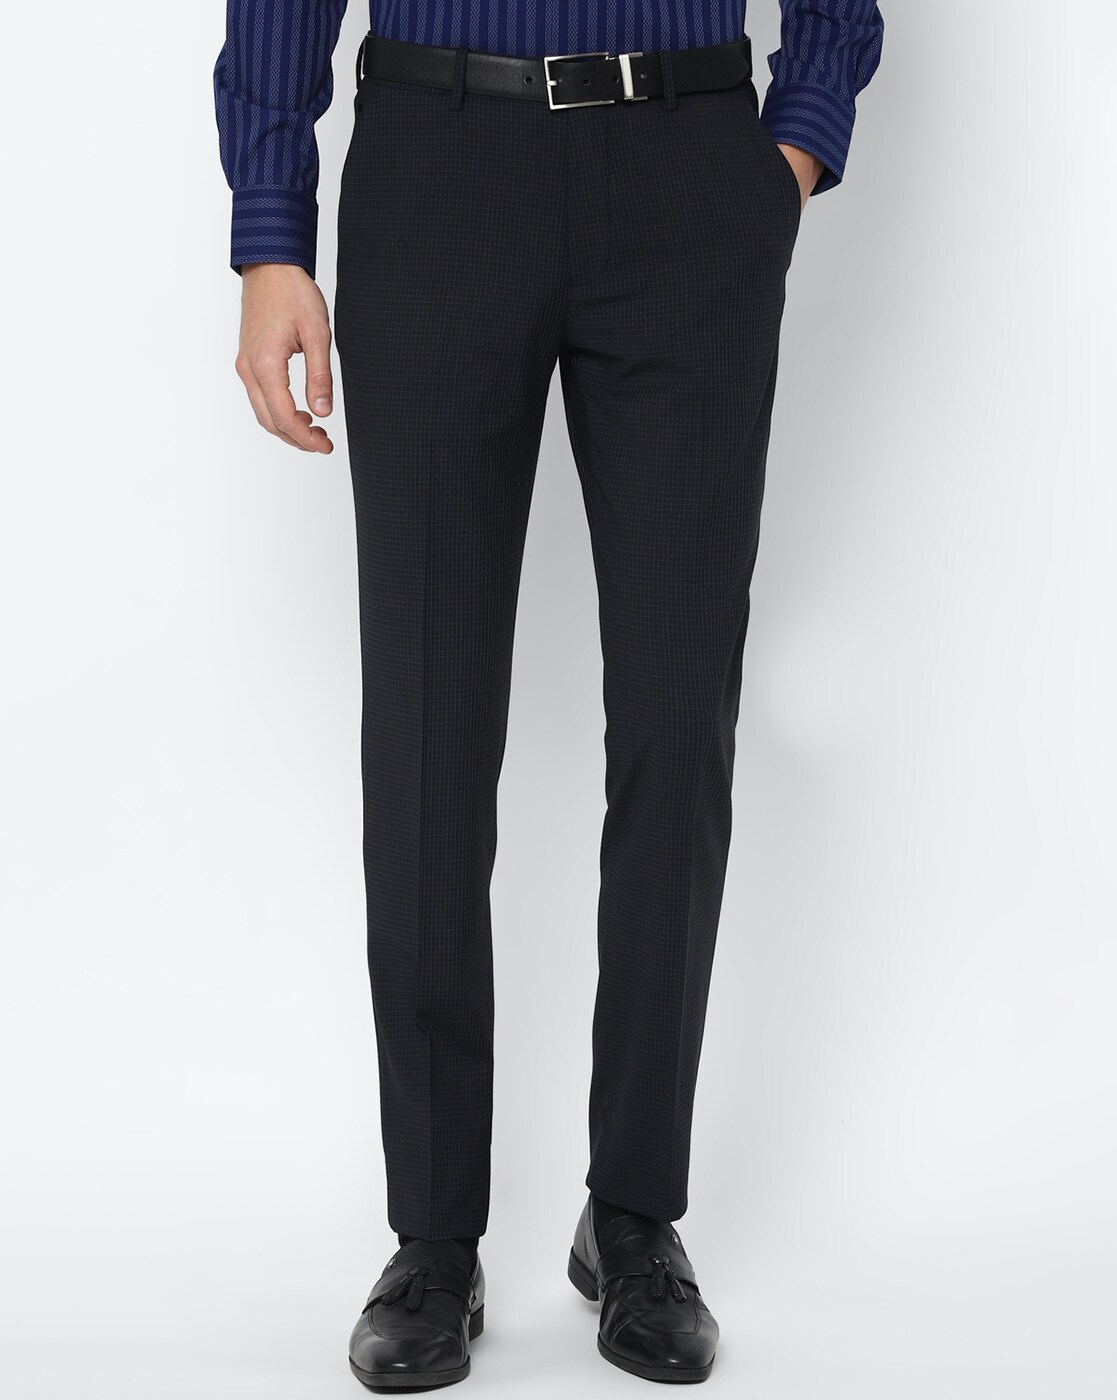 Buy Louis Philippe Black Trousers Online - 805374